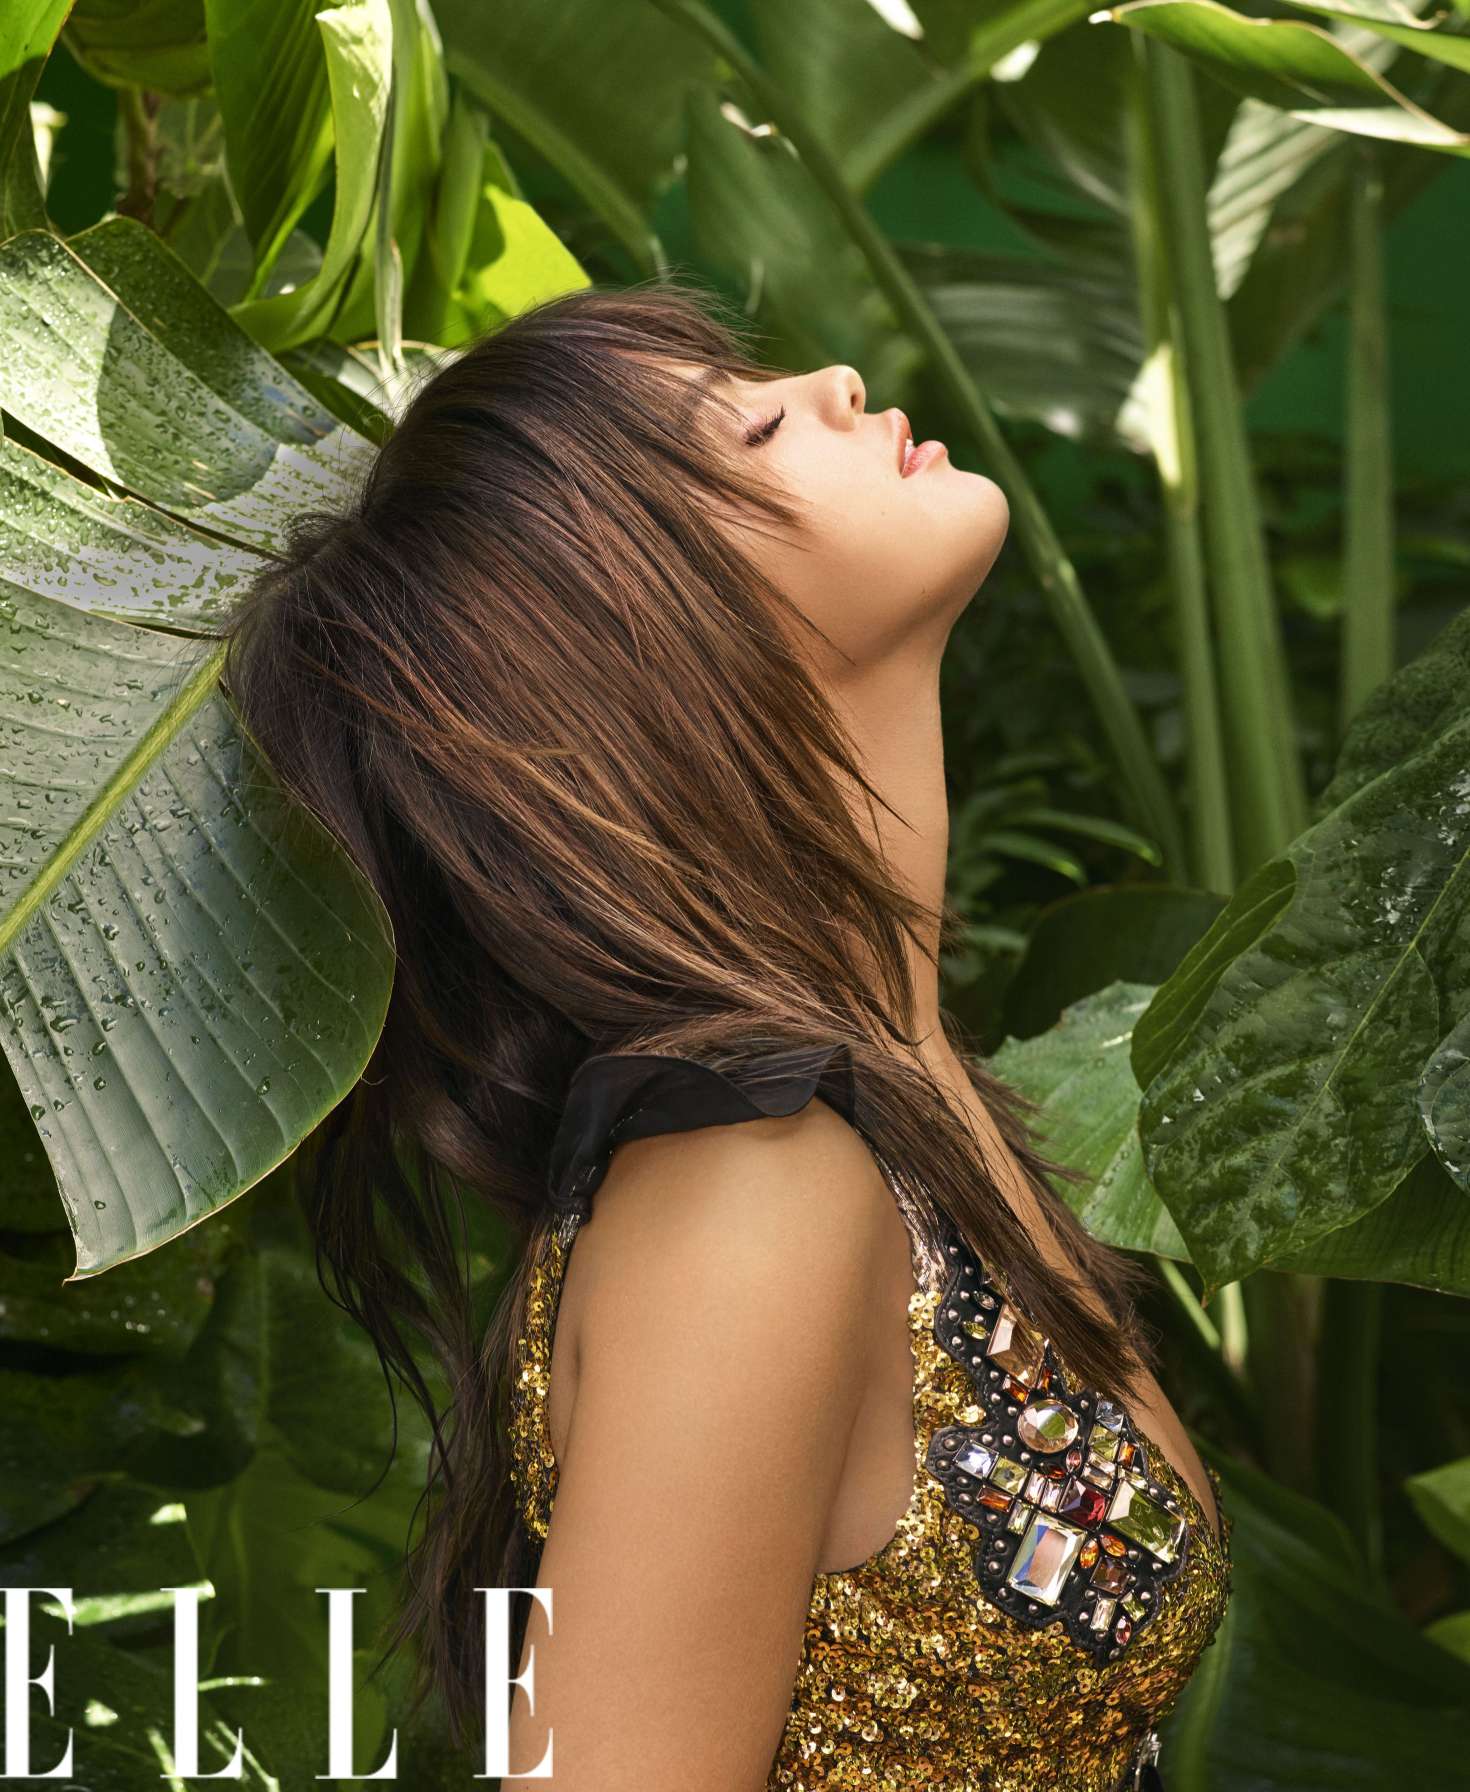 Selena Gomez for Elle US Magazine (October 2018)